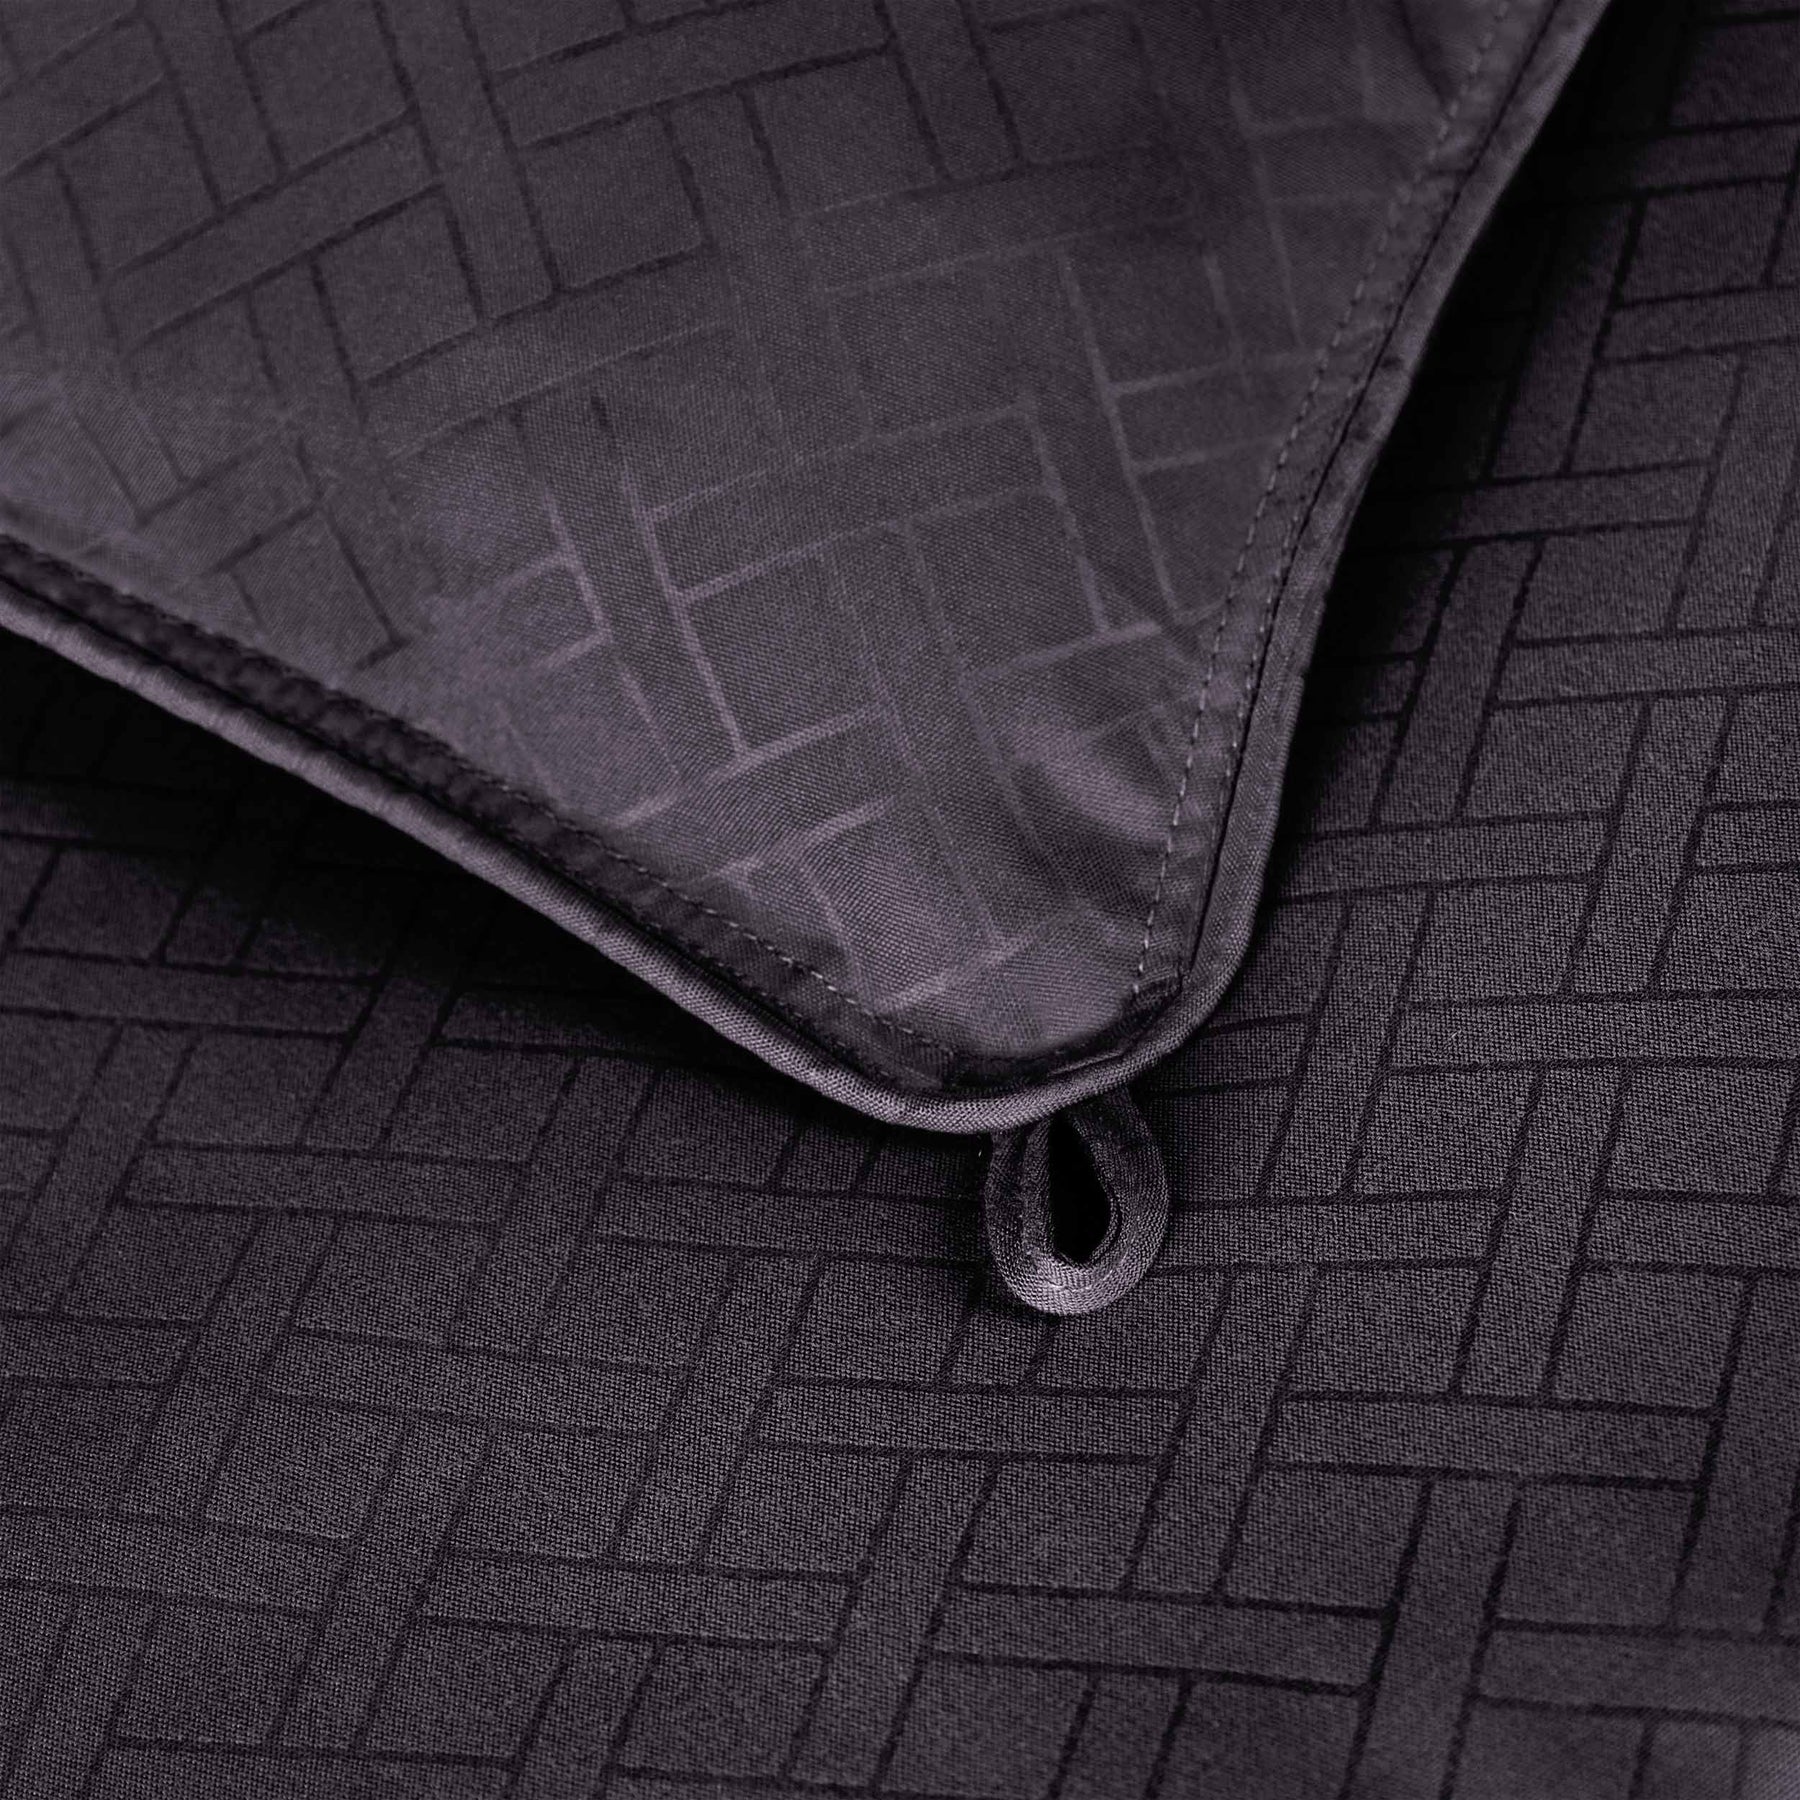 Monochrome Basketweave Plush Microfiber Down Alternative Comforter - Black